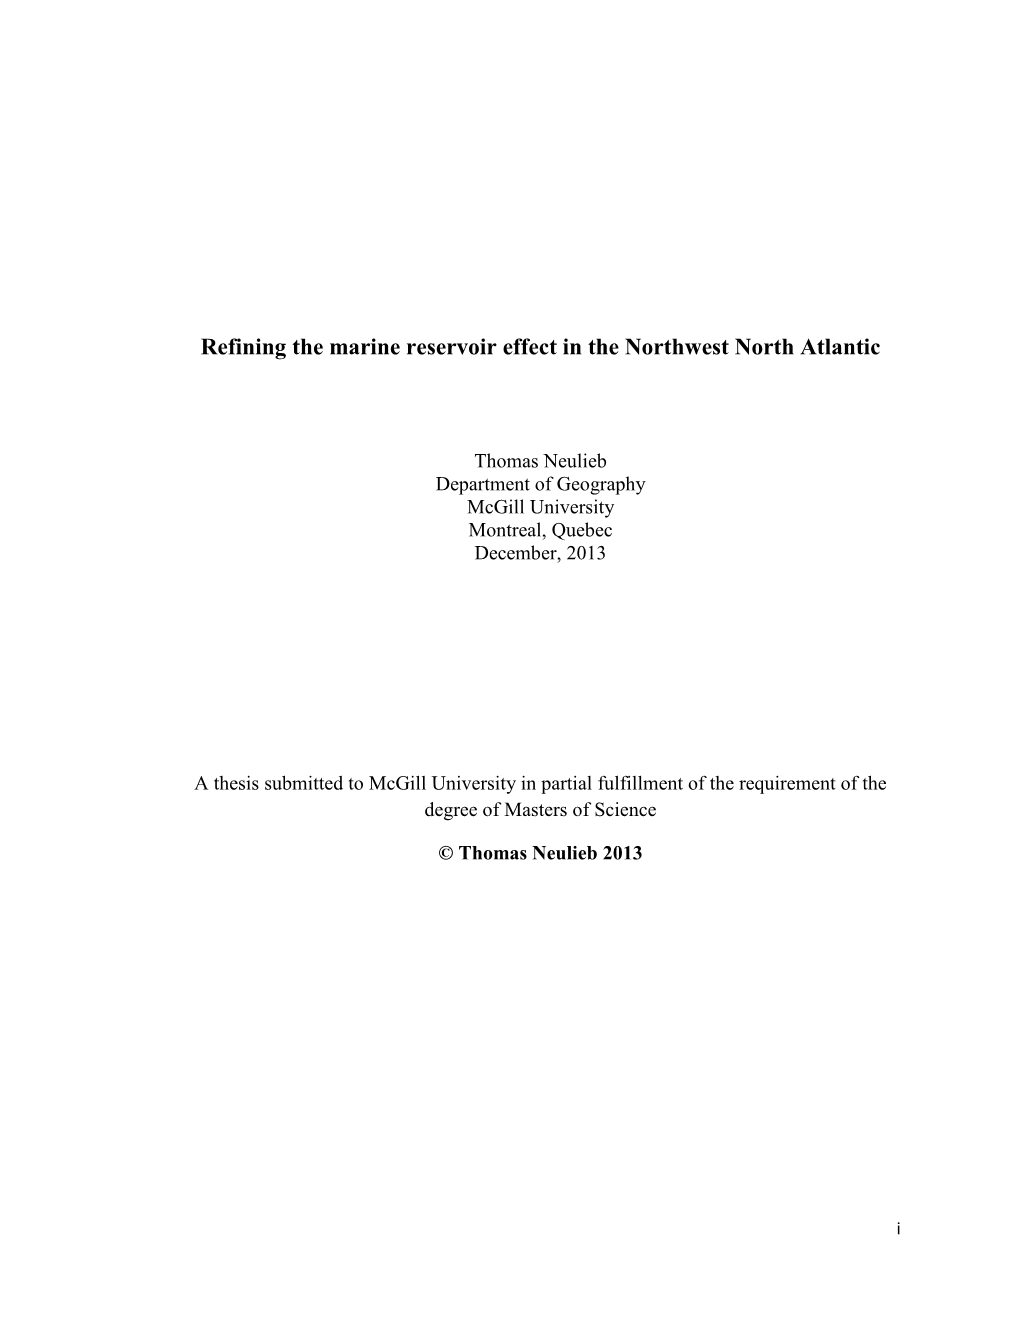 Refining the Marine Reservoir Effect in the Northwest North Atlantic